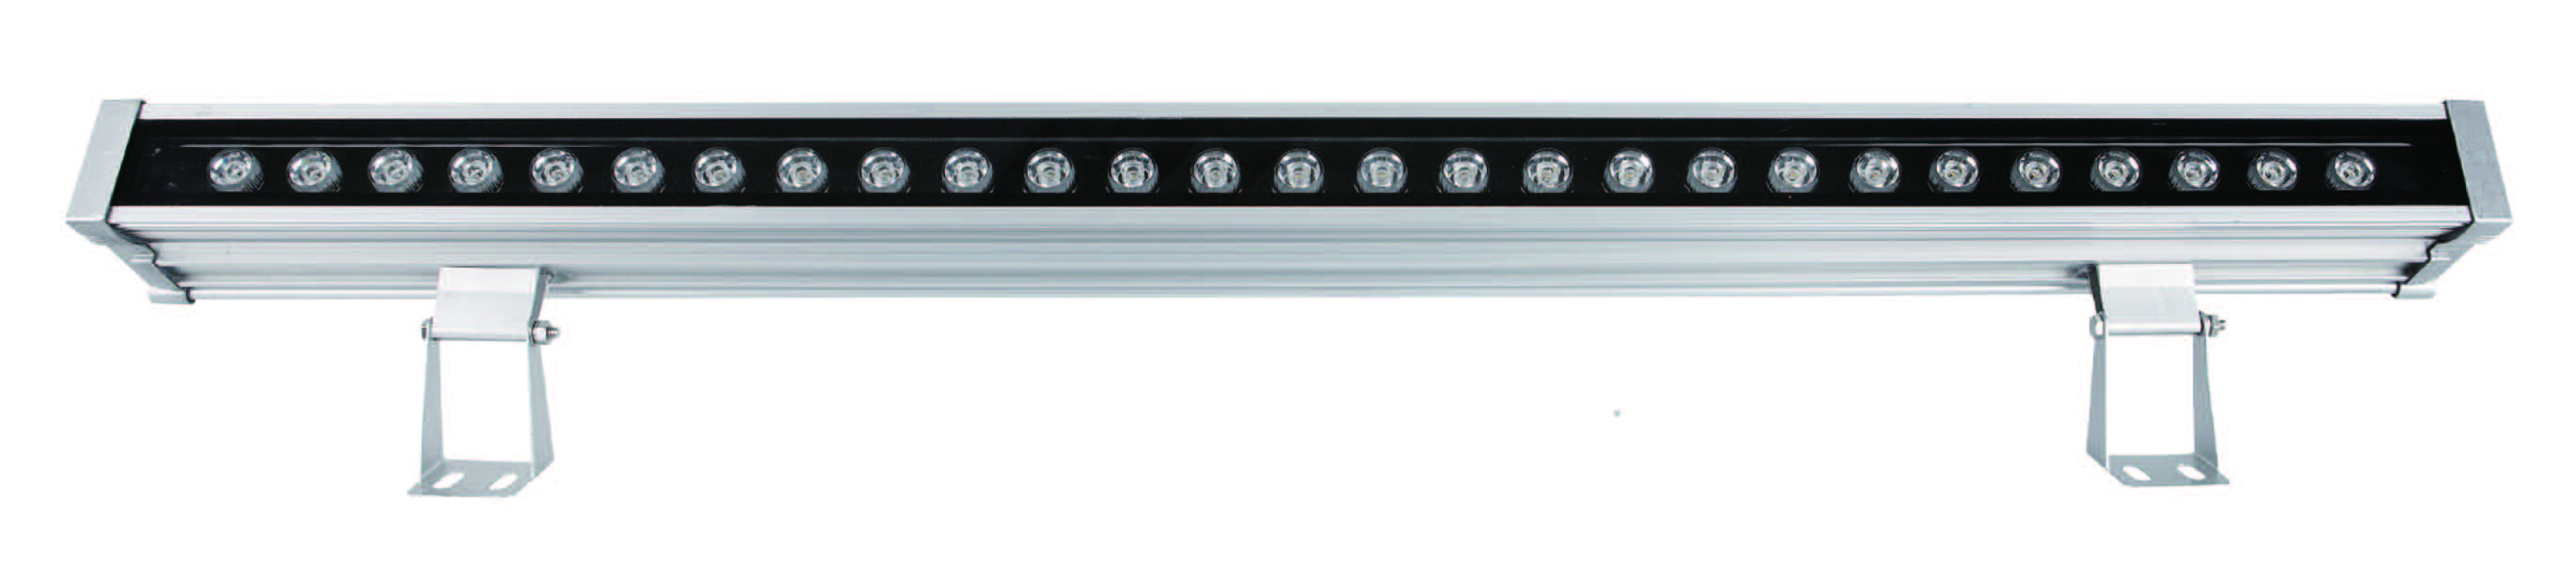 LED洗墙灯EBT-XQD-02